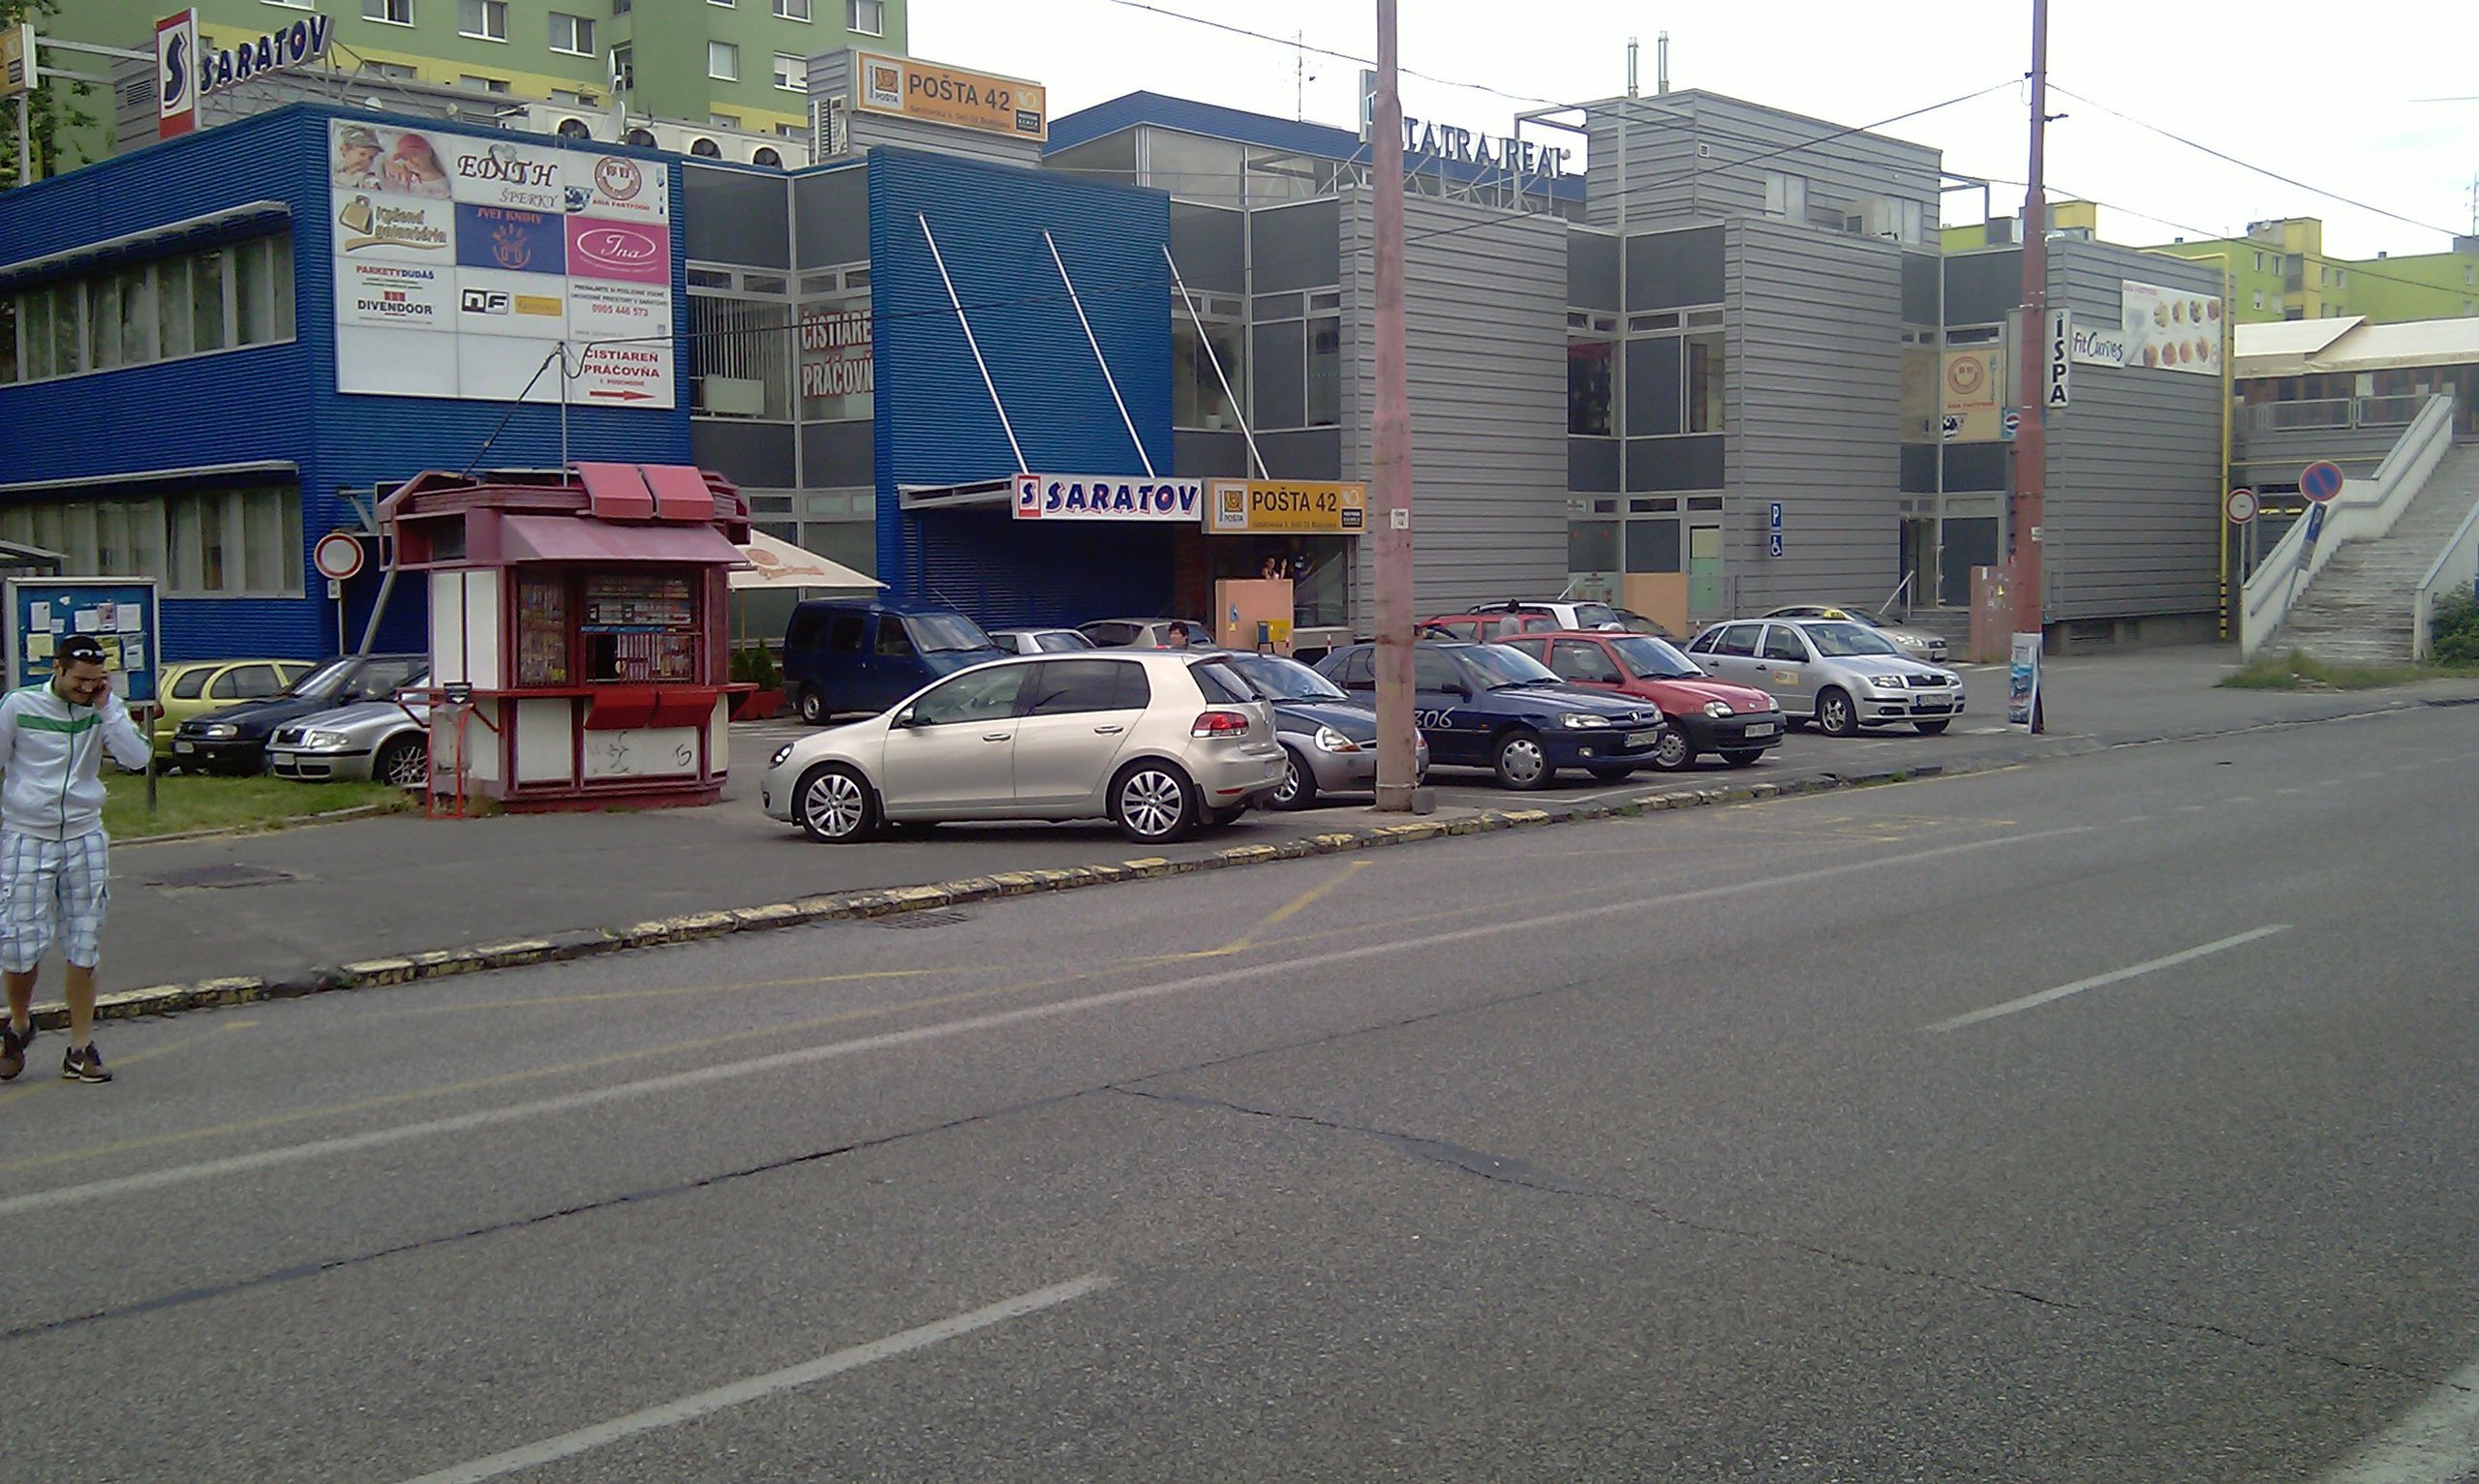 Nebezpečné parkovanie pri Saratove, Dúbravka, Bratislava |  Odkazprestarostu.sk